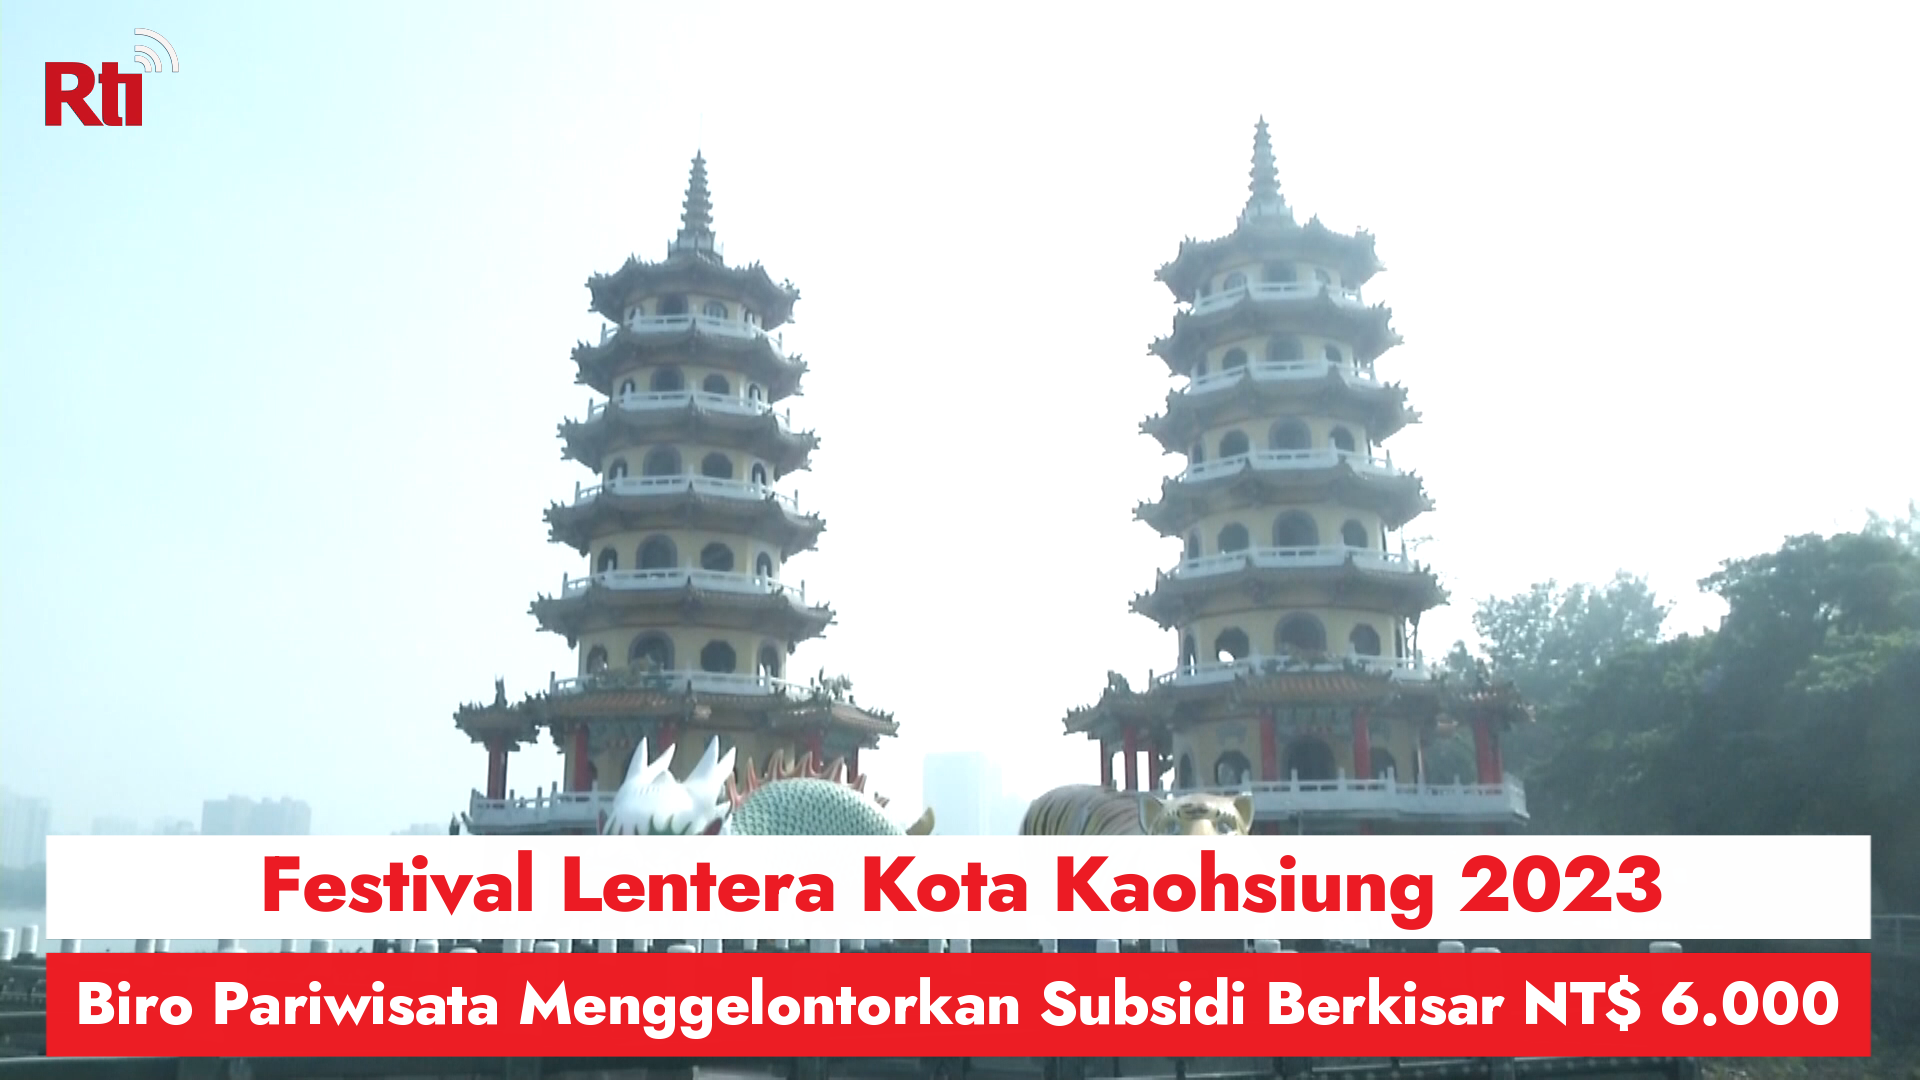 Festival Lentera Kota Kaohsiung 2023, Biro Pariwisata Menggelontorkan Subsidi Berkisar NT$ 6.000